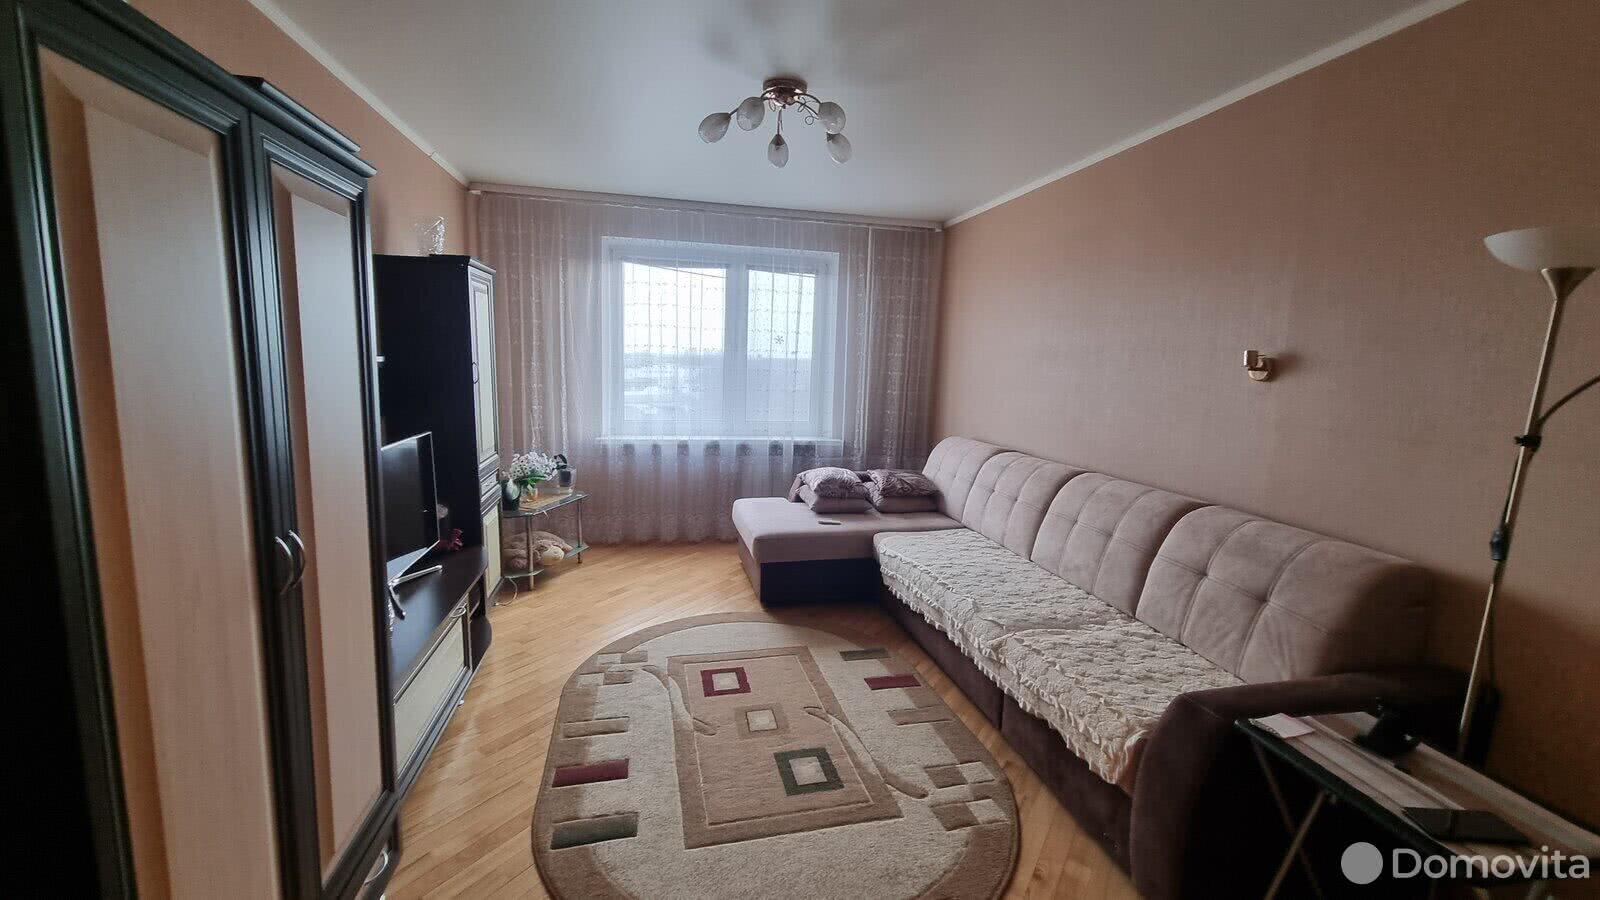 квартира, Борисов, ул. Орджоникидзе, д. 51, стоимость продажи 162 625 р.